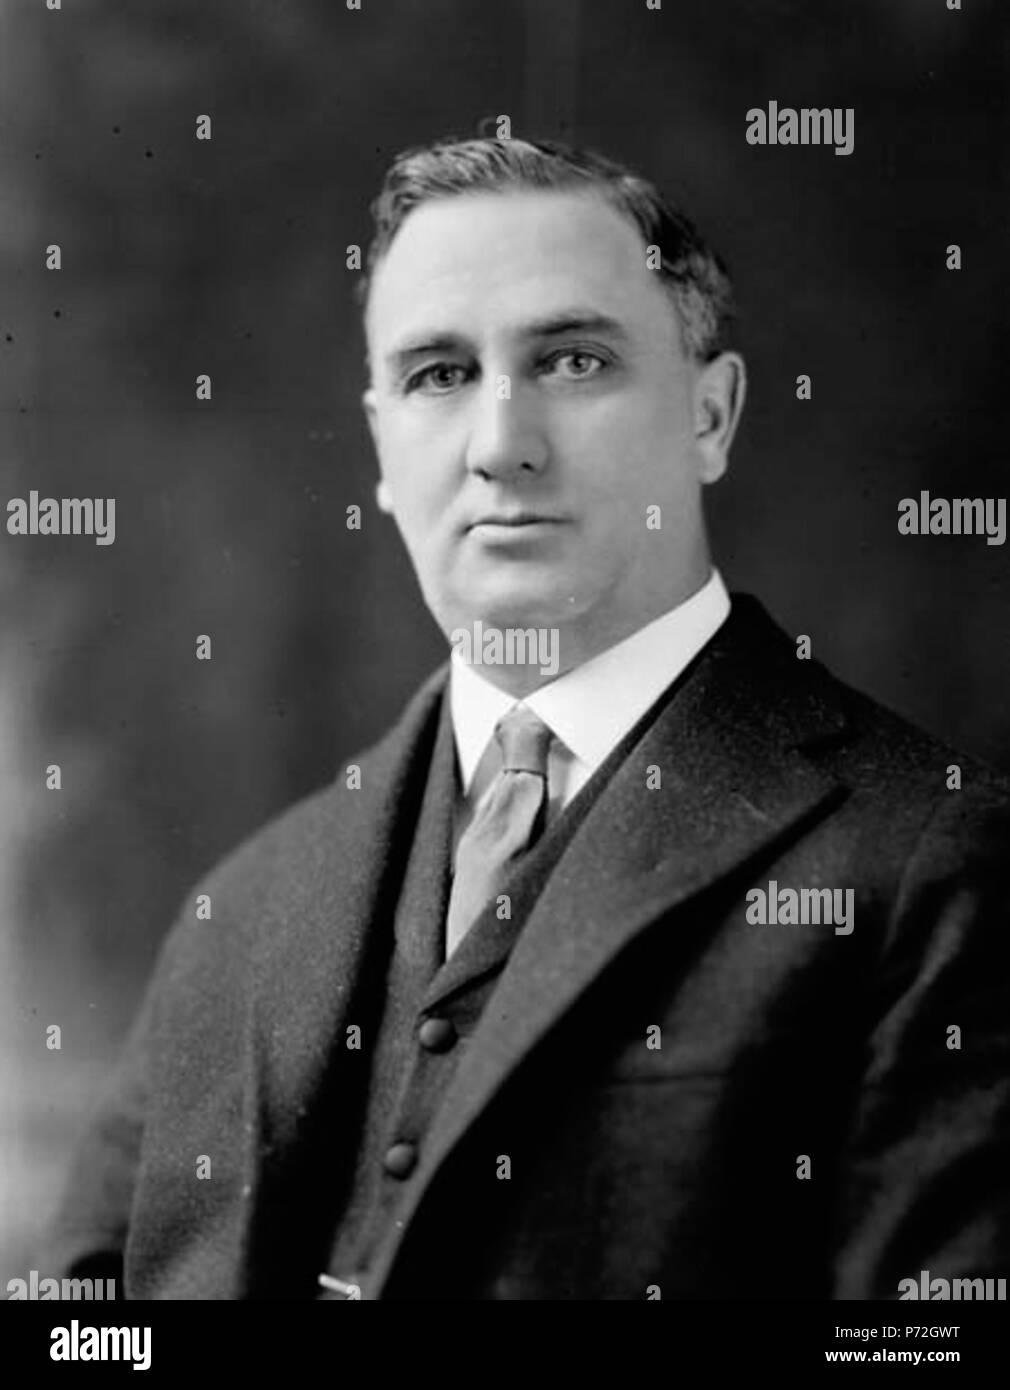 Robertson, Gedeone Decker On. (Senatore) Agosto 26, 1874 - Agosto 5, 1933. Maggio 1922 13 Gedeone Robertson Foto Stock